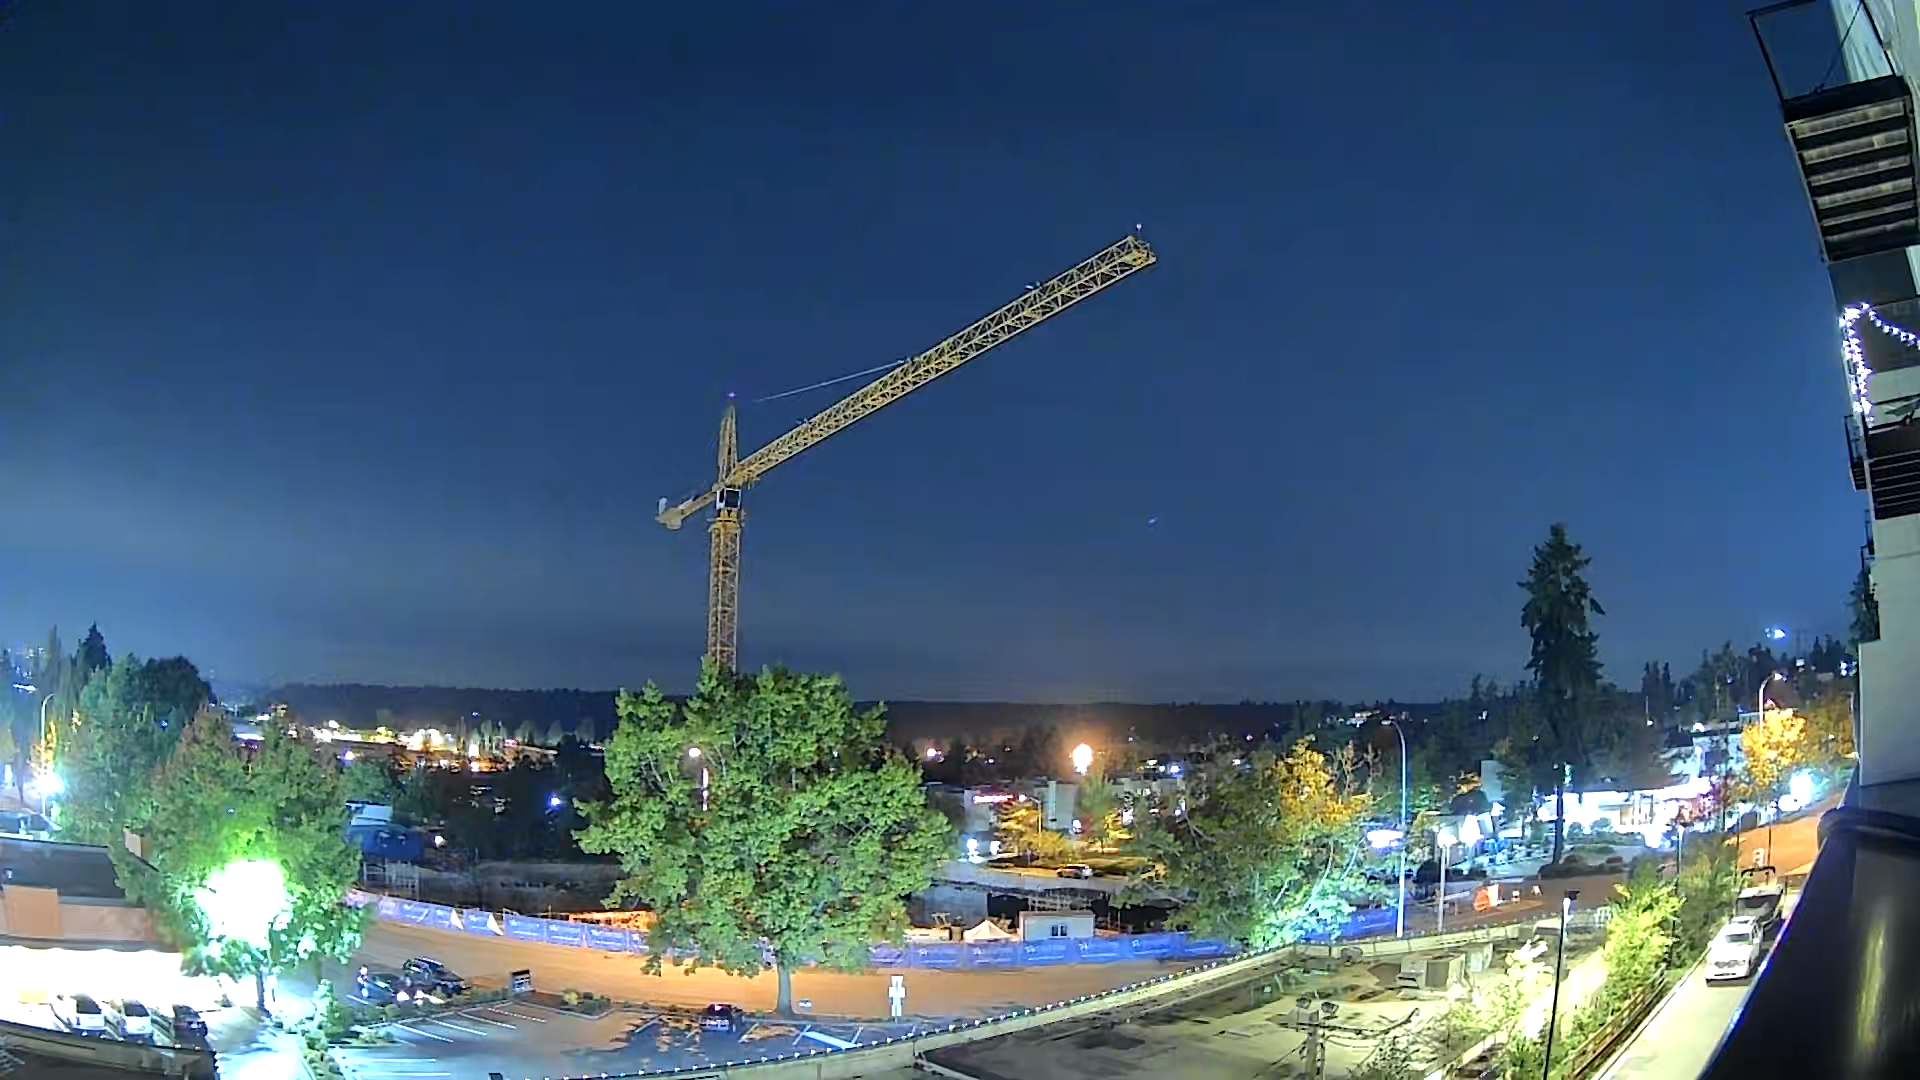 Wyze Cam night image with crane